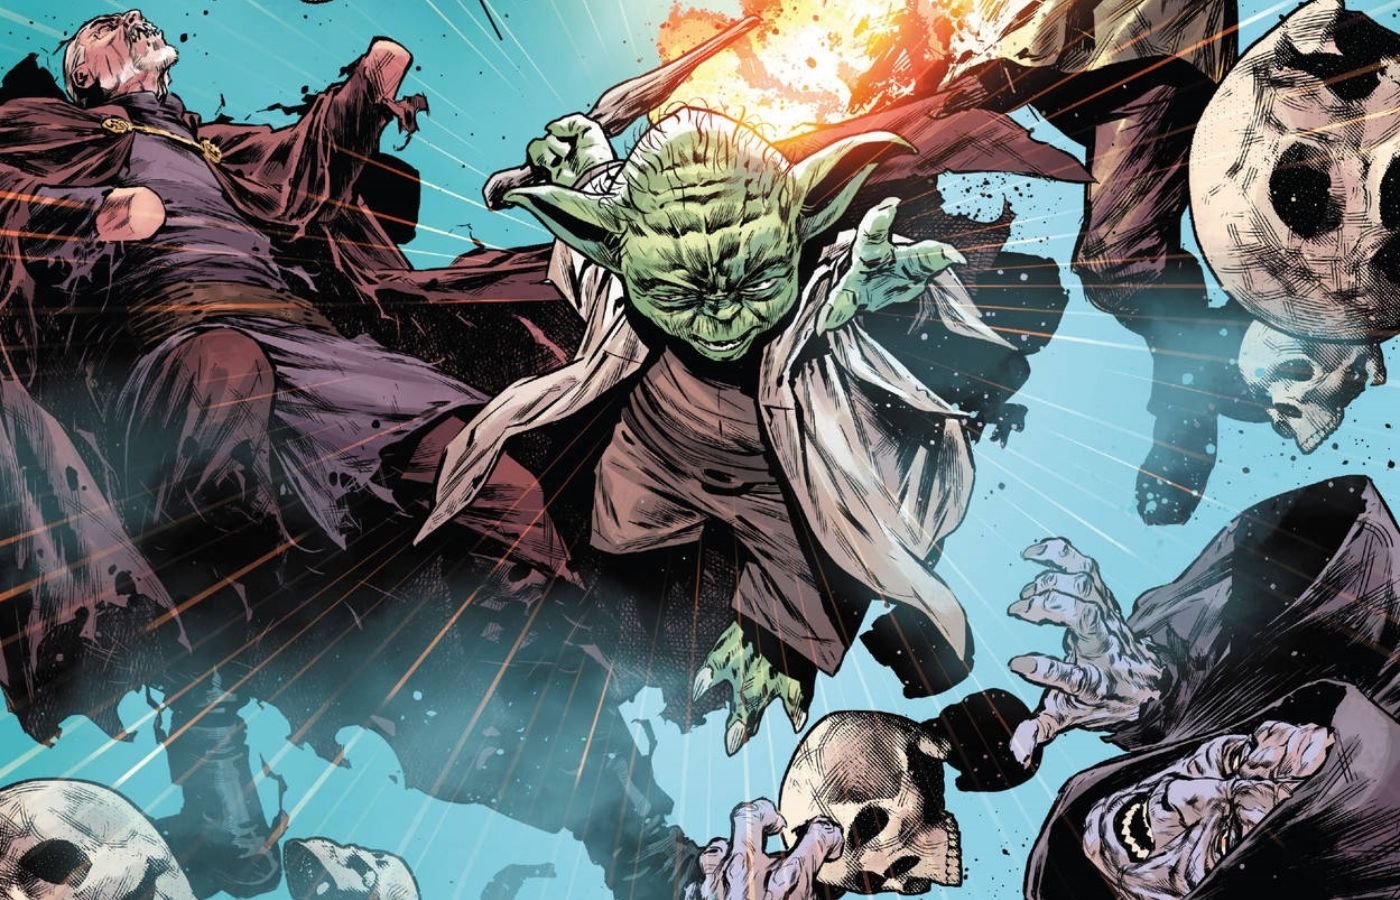 Yoda battling the 'spirits' of Count Dooku, Anakin Skywalker, and Emperor Palpatine.